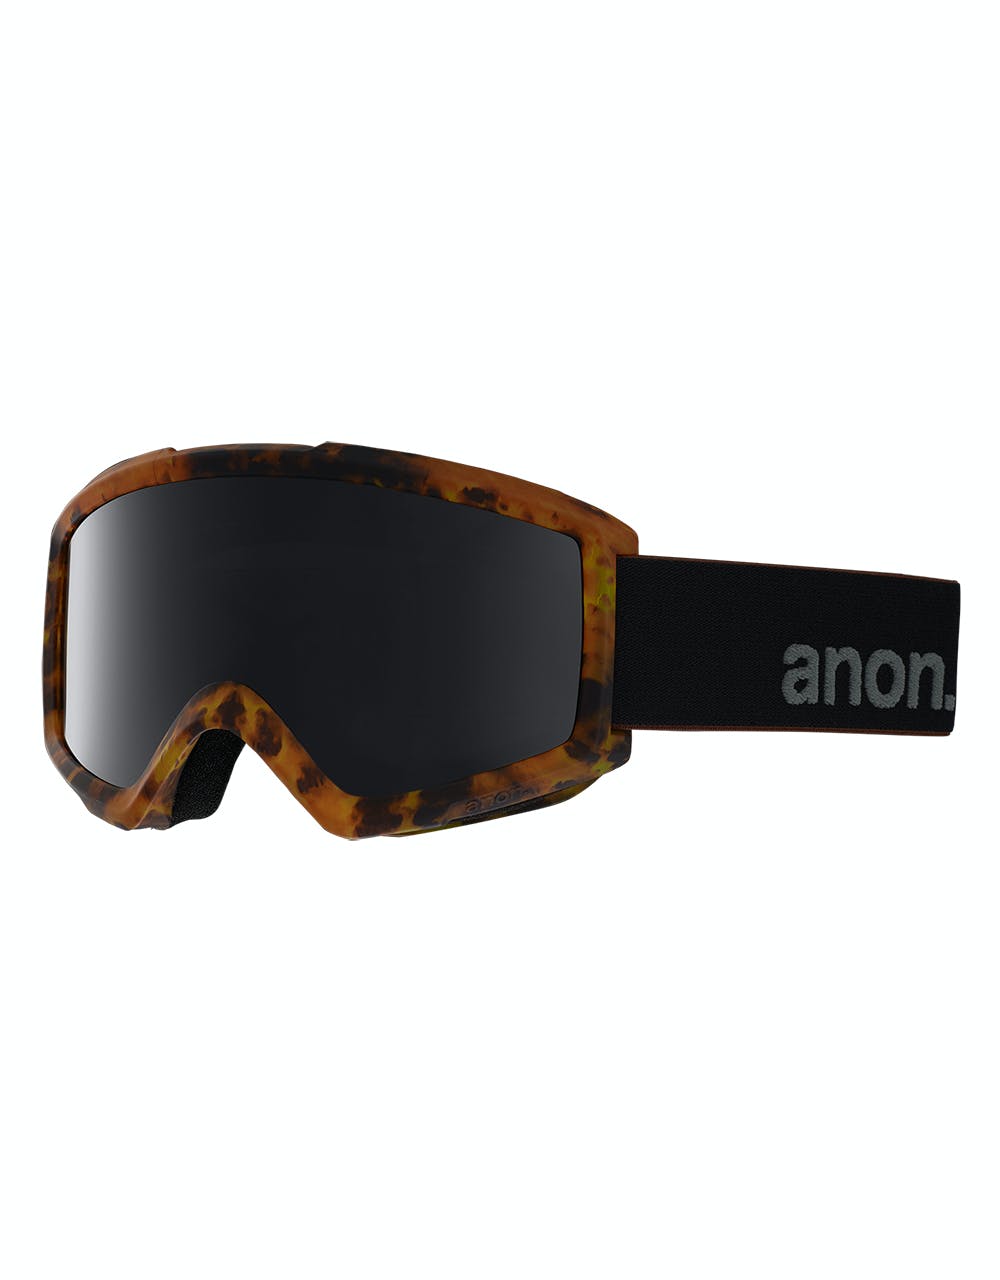 Anon Helix 2 Sonar Snowboard Goggles - Tort/Sonar Smoke